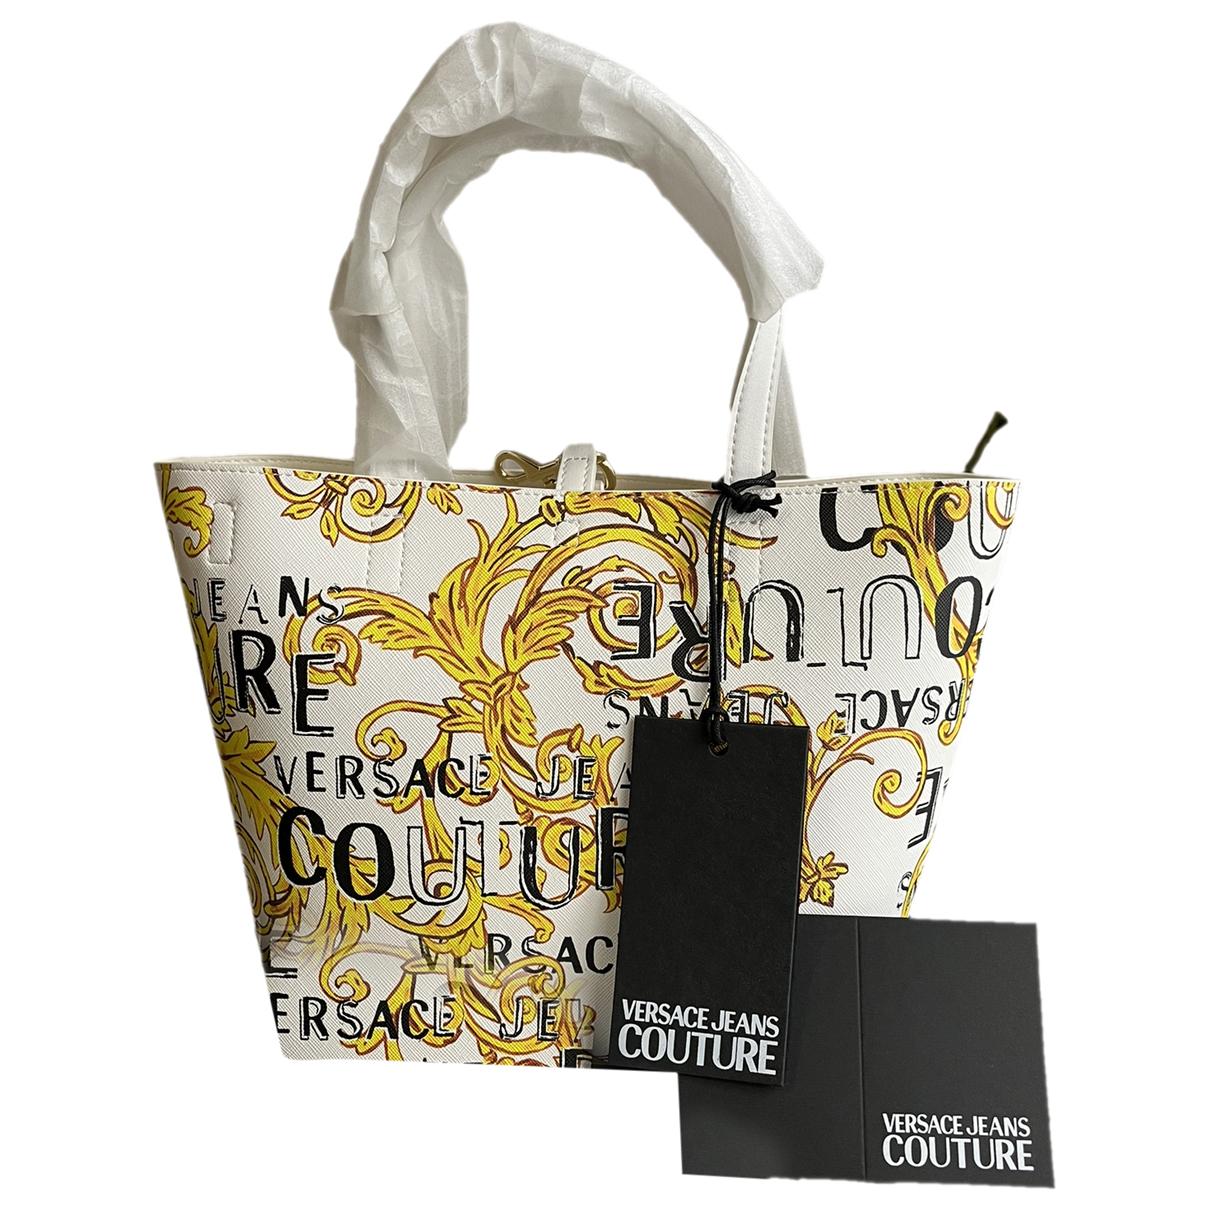 Handbag for women  Buy or Sell your Handbags online! - Vestiaire Collective